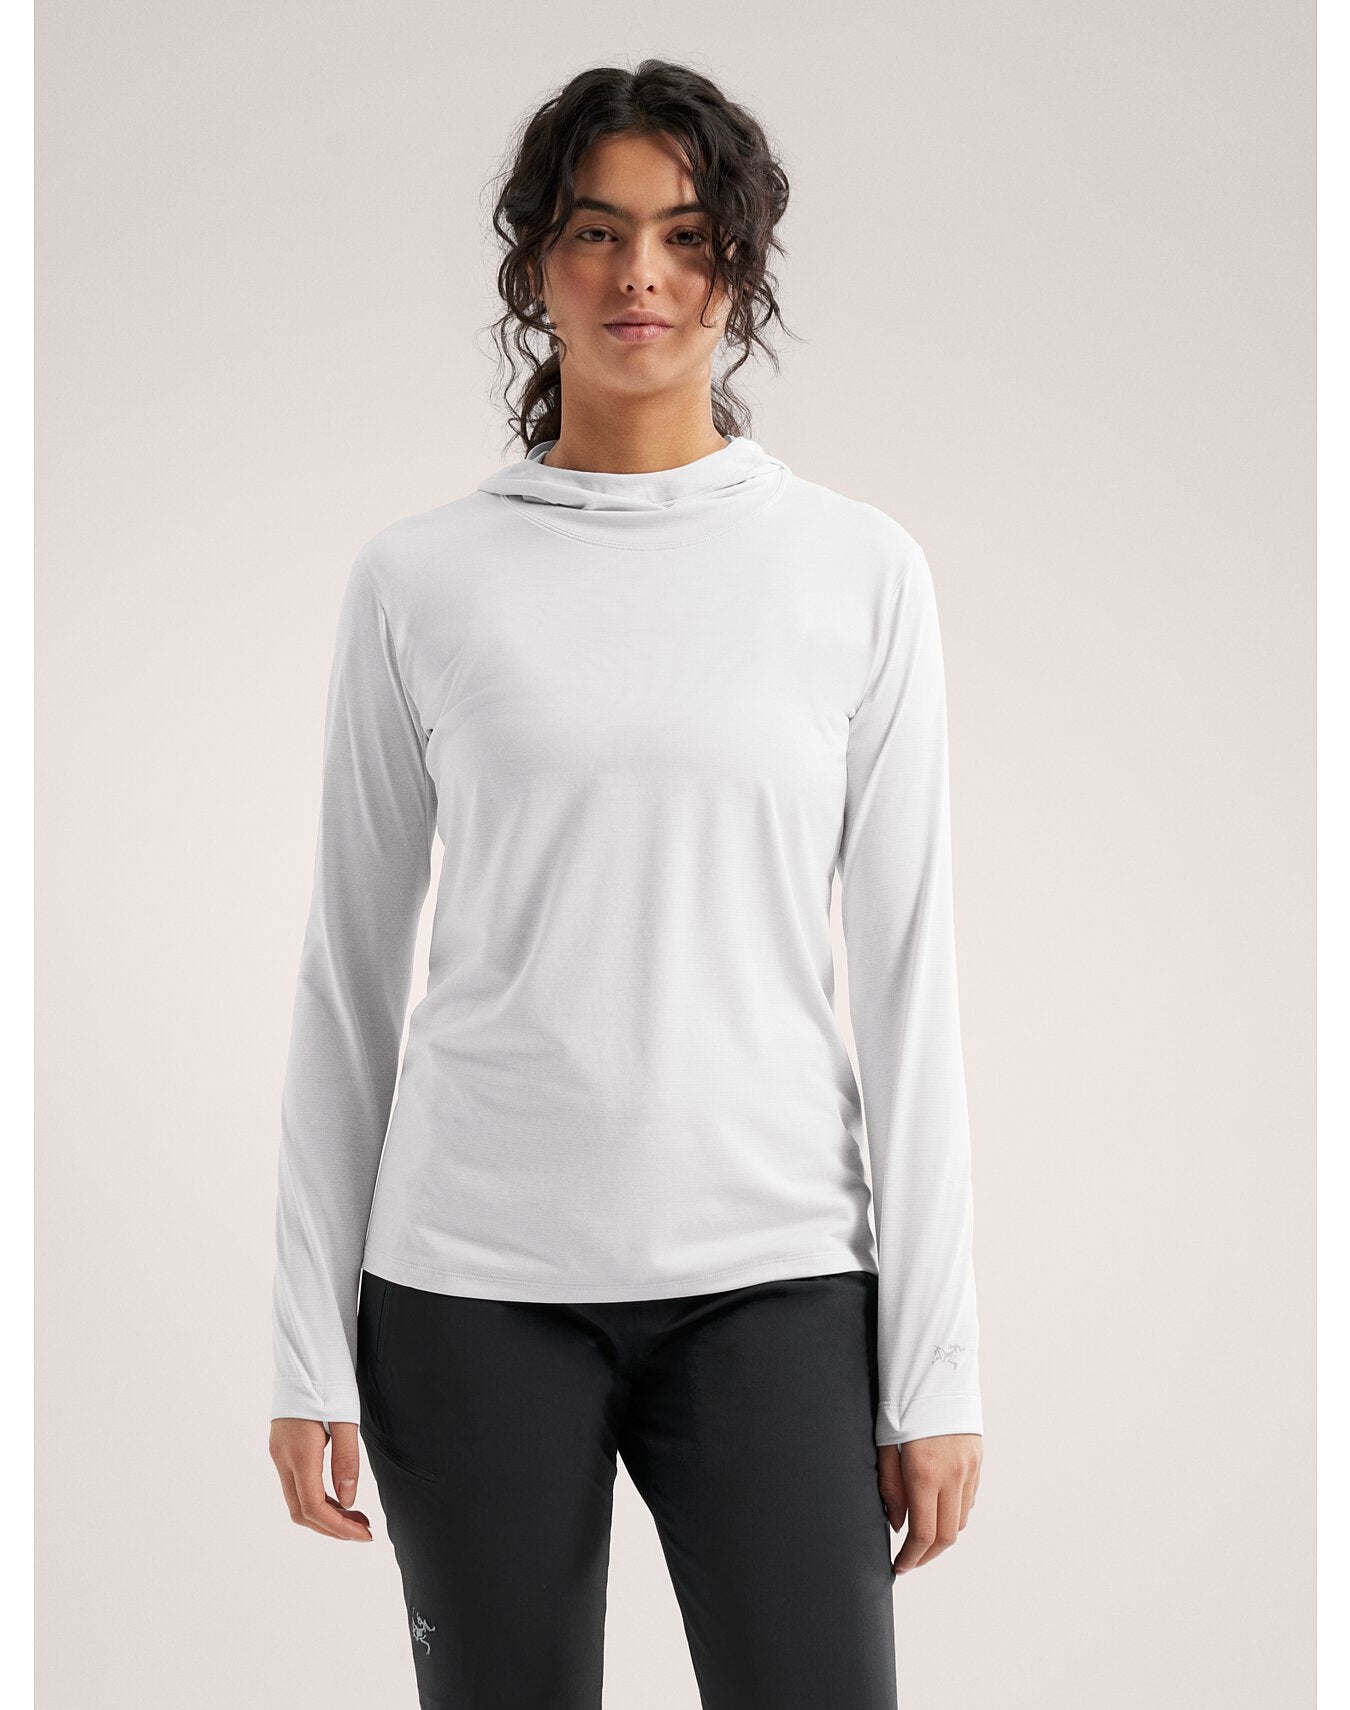 Lululemon Women's Longsleeve T-Shirt Tech Front Pocket Active Gym Size 4